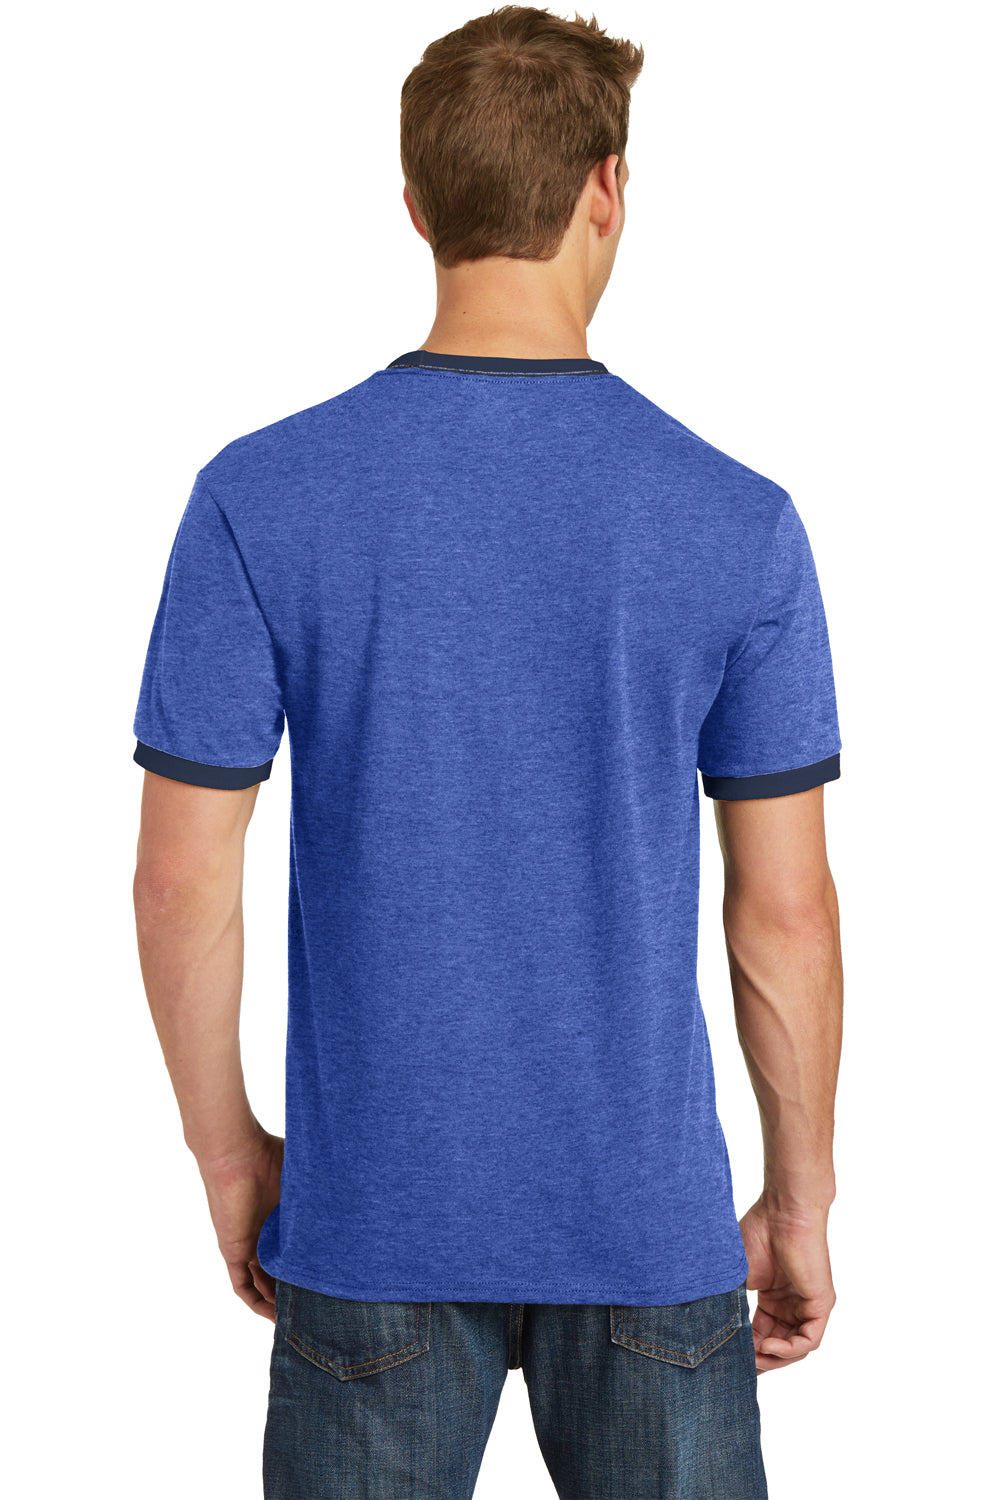 Port & Company PC54R Mens Core Ringer Short Sleeve Crewneck T-Shirt Heather Royal Blue/Navy Blue Back